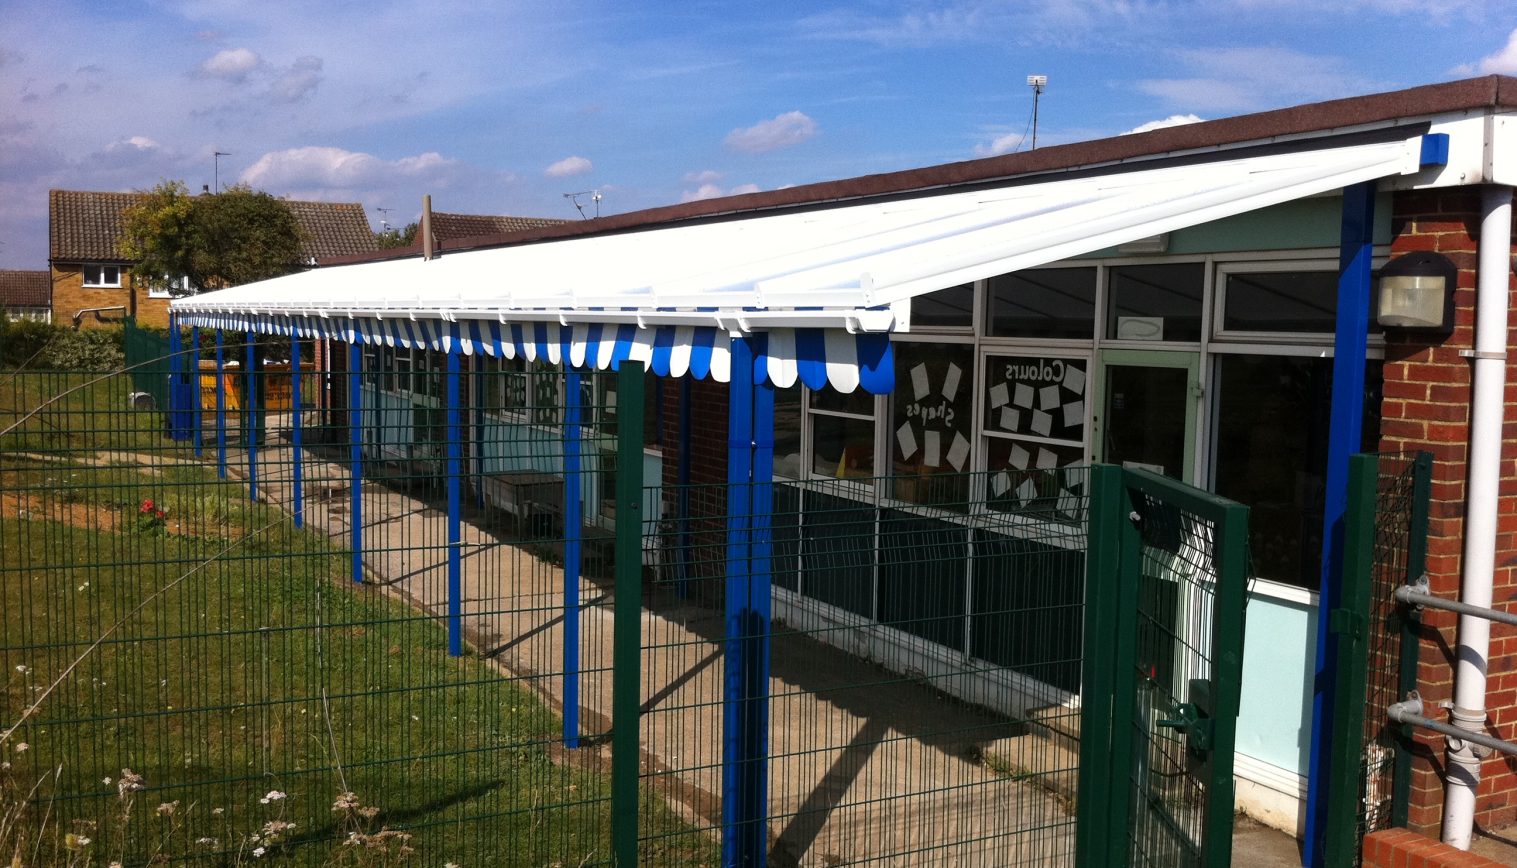 Pirton Hill Primary School